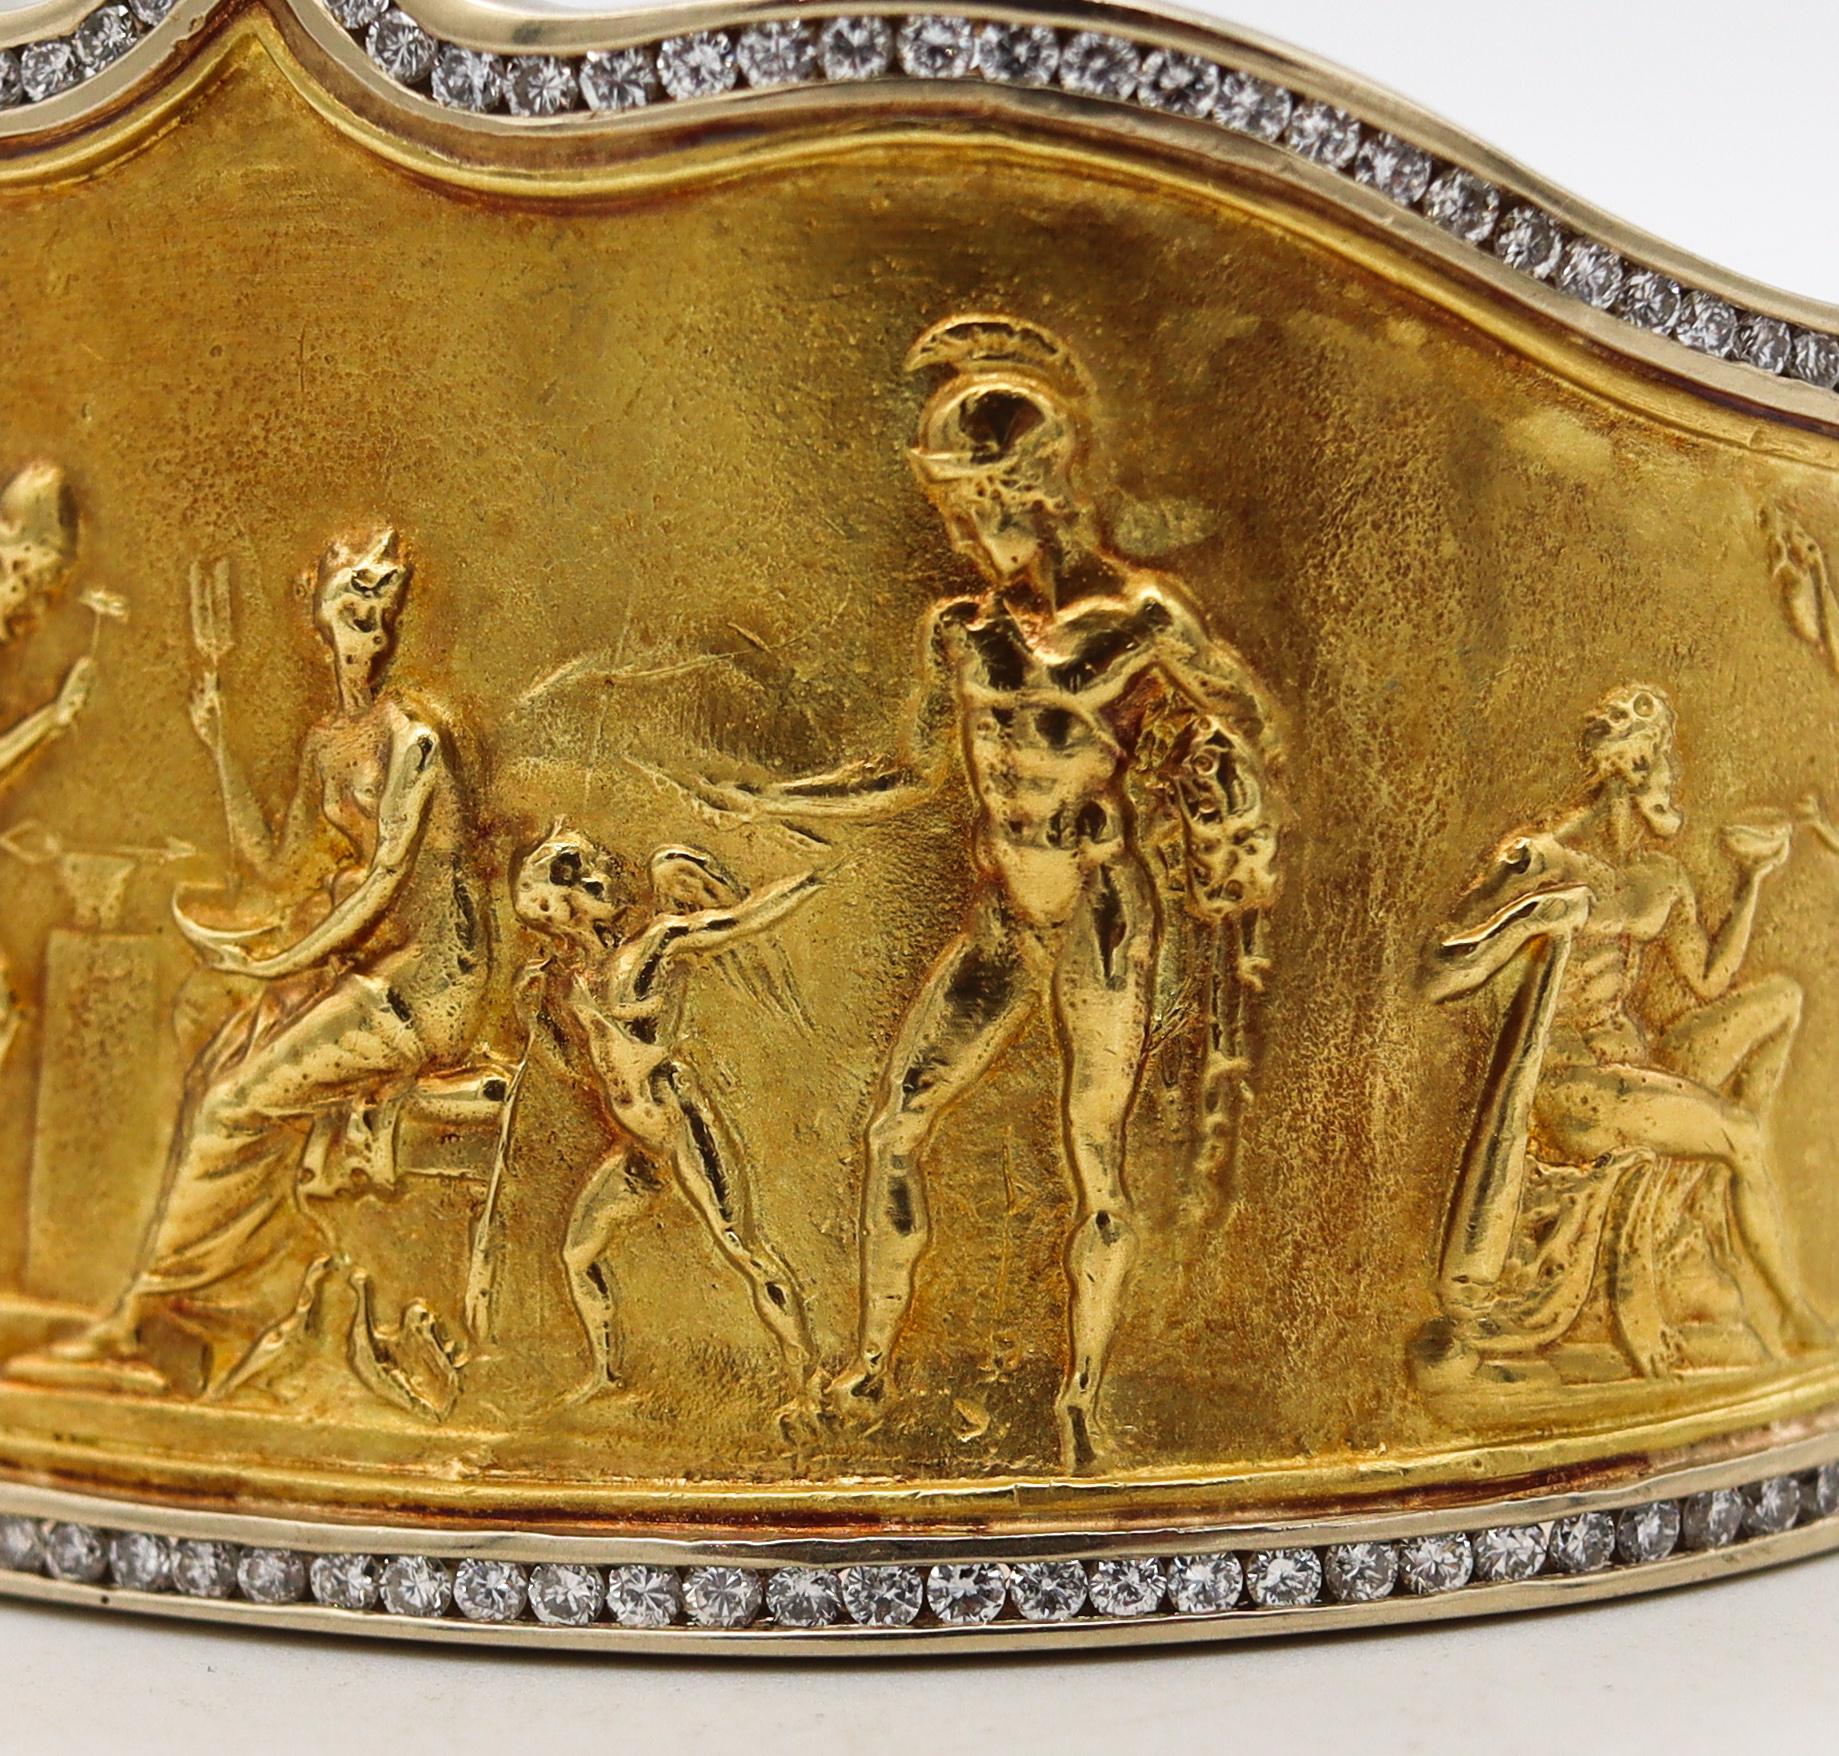 SeidenGang Rare Etruscan-Greek Revival Bracelet 18Kt Yellow Gold 5.94 Ct Diamond 7